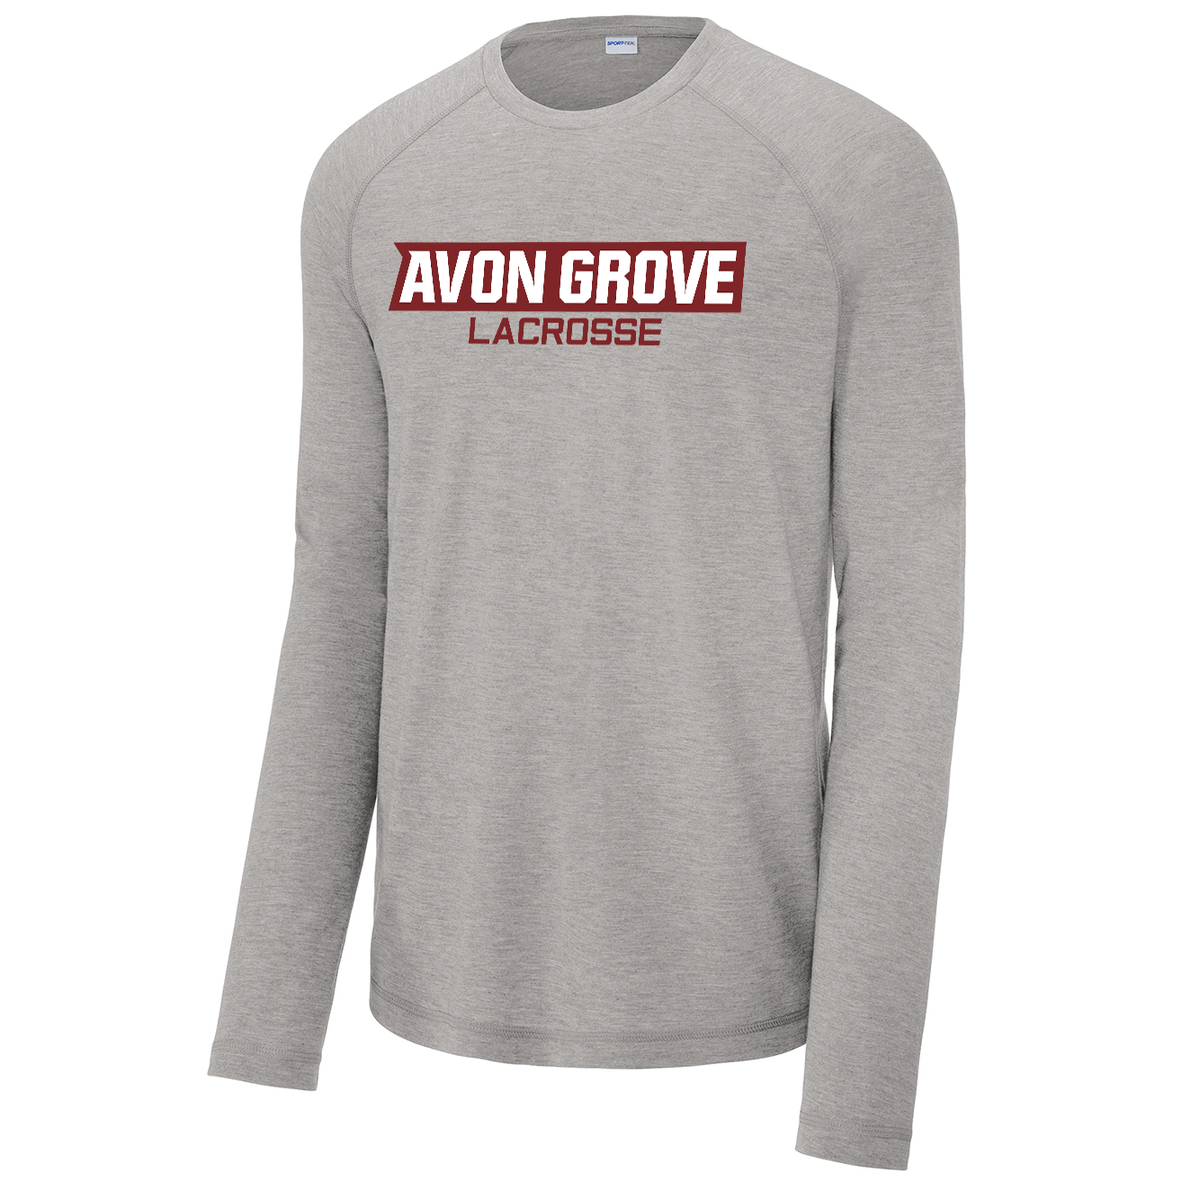 Avon Grove Lacrosse Long Sleeve Raglan CottonTouch